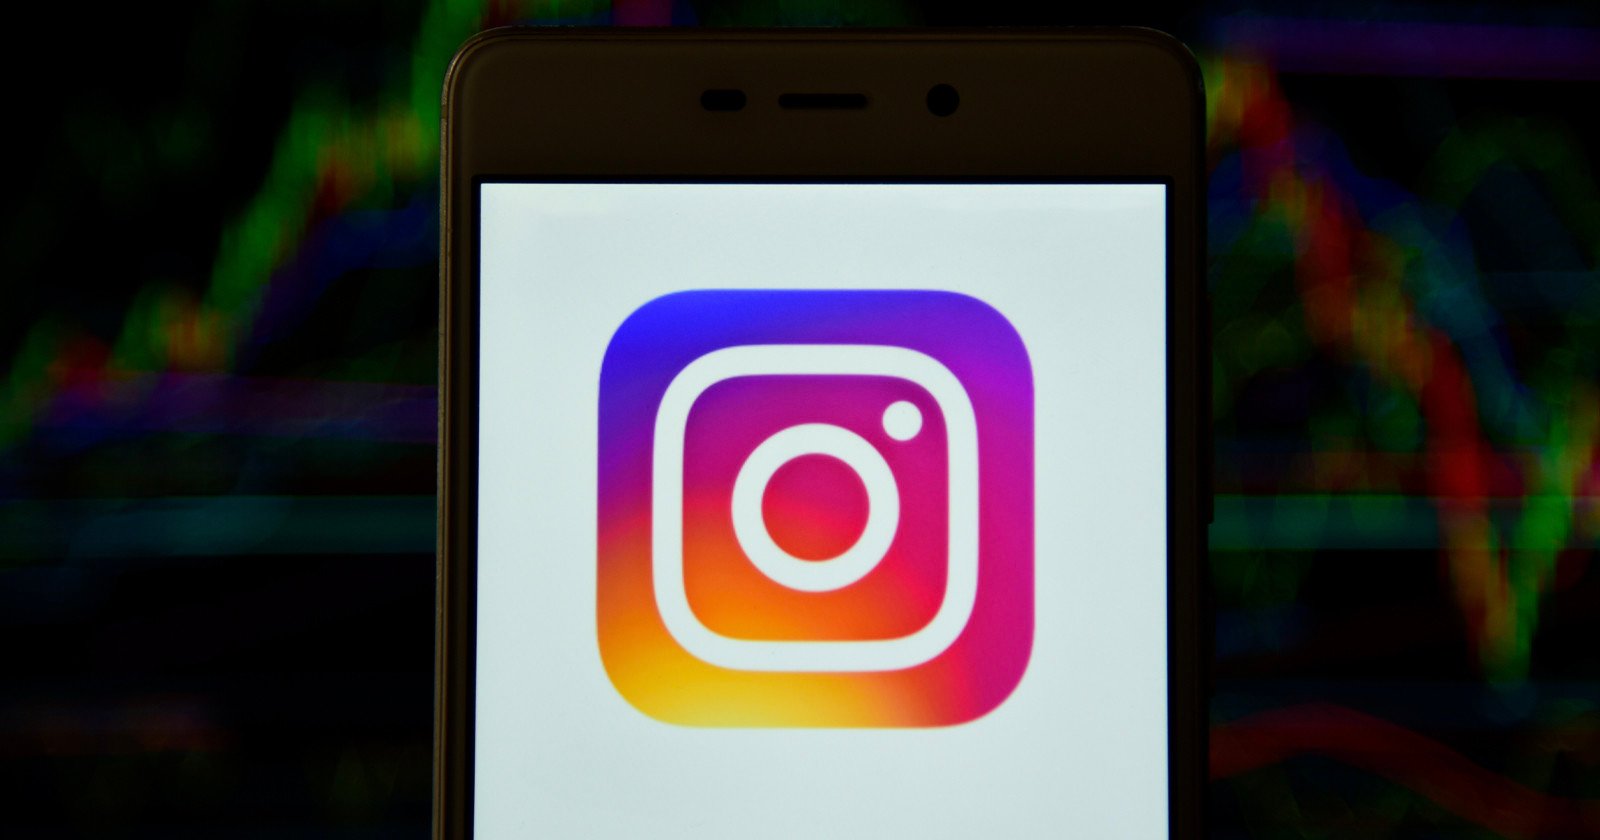 Senators to Investigate Instagram: Congress Members Say Facebook Lied